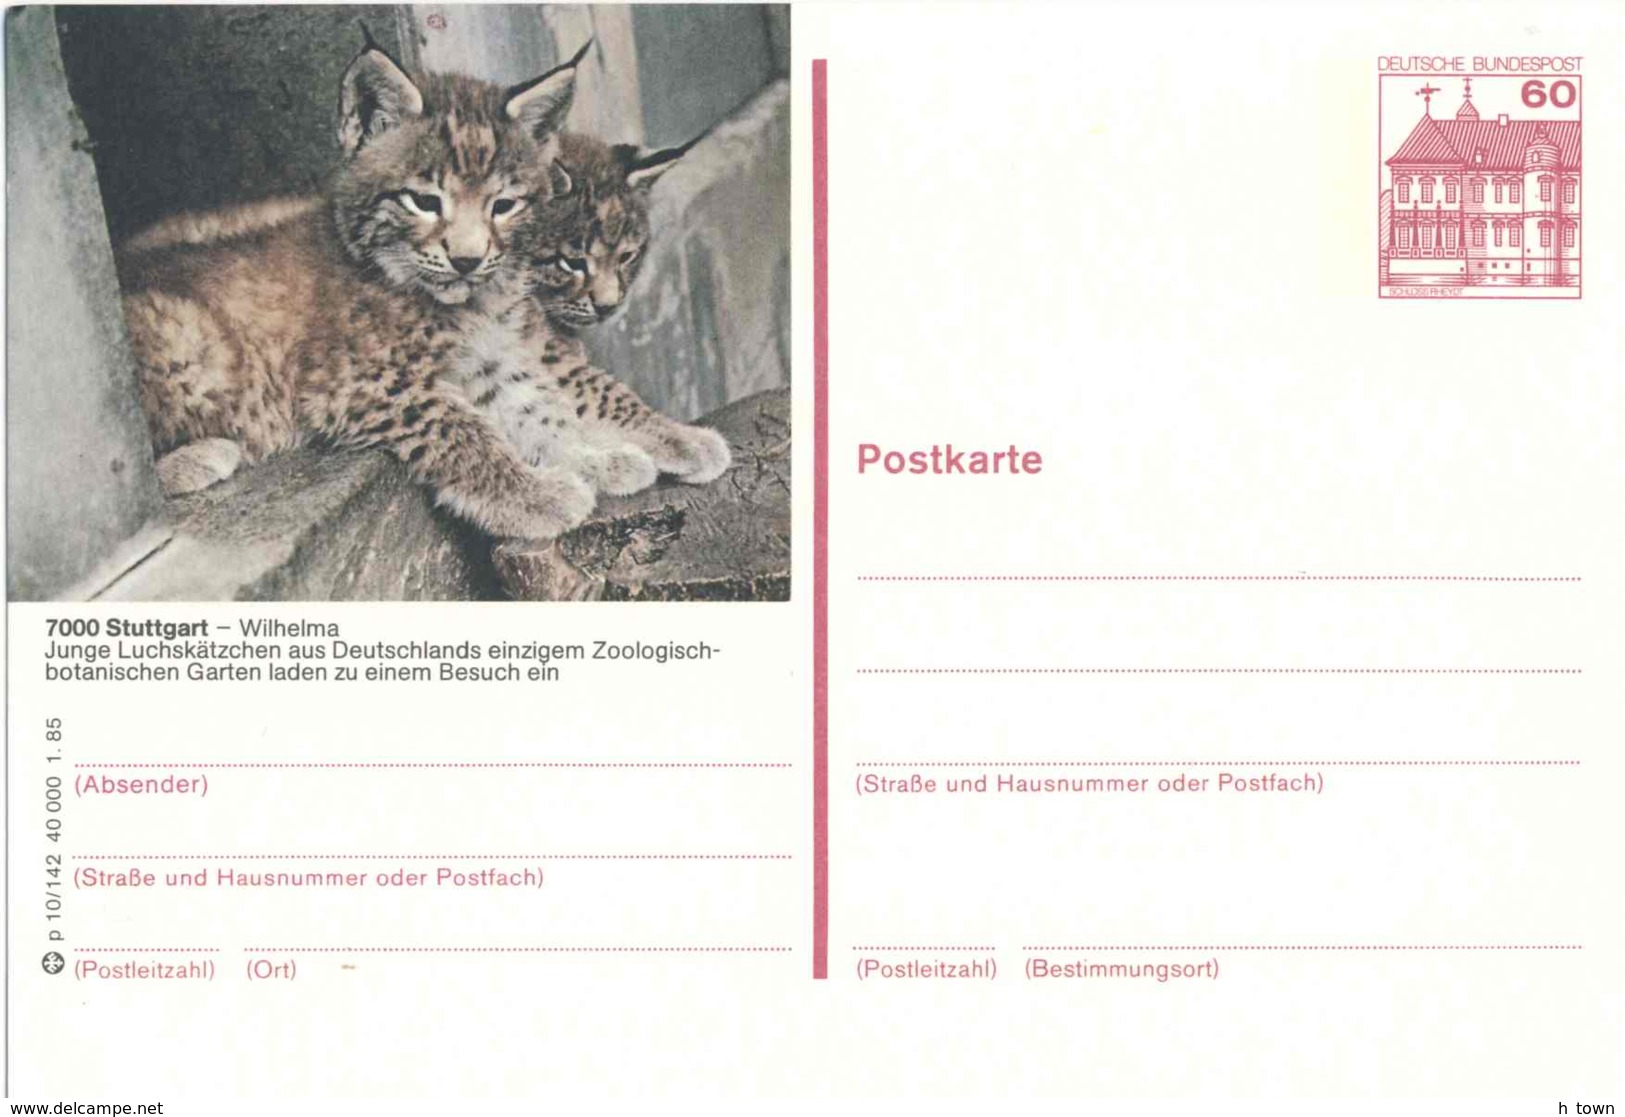 7219  Lynx: Entier (c.p.) D'Allemagne, 1985 - Lynx Stationery Postcard From Germany, Wilhelma Zoo Stuttgart - Felini